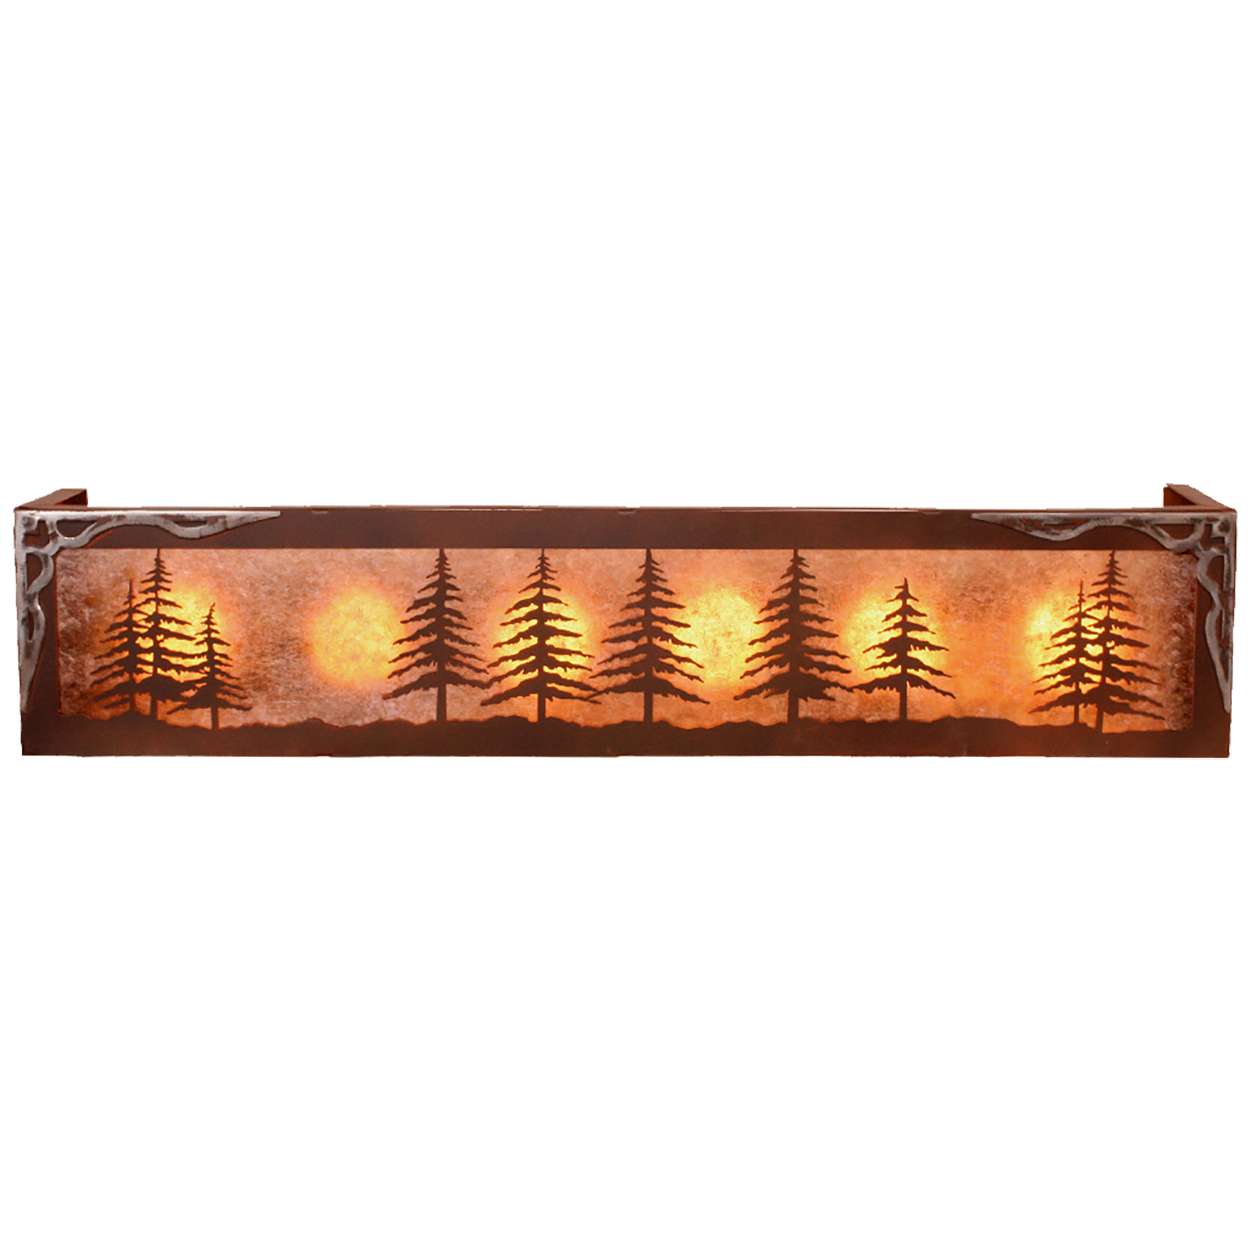 LVB-4030-6030 Burnished Vanity Light Strip Fixture Pine Tree